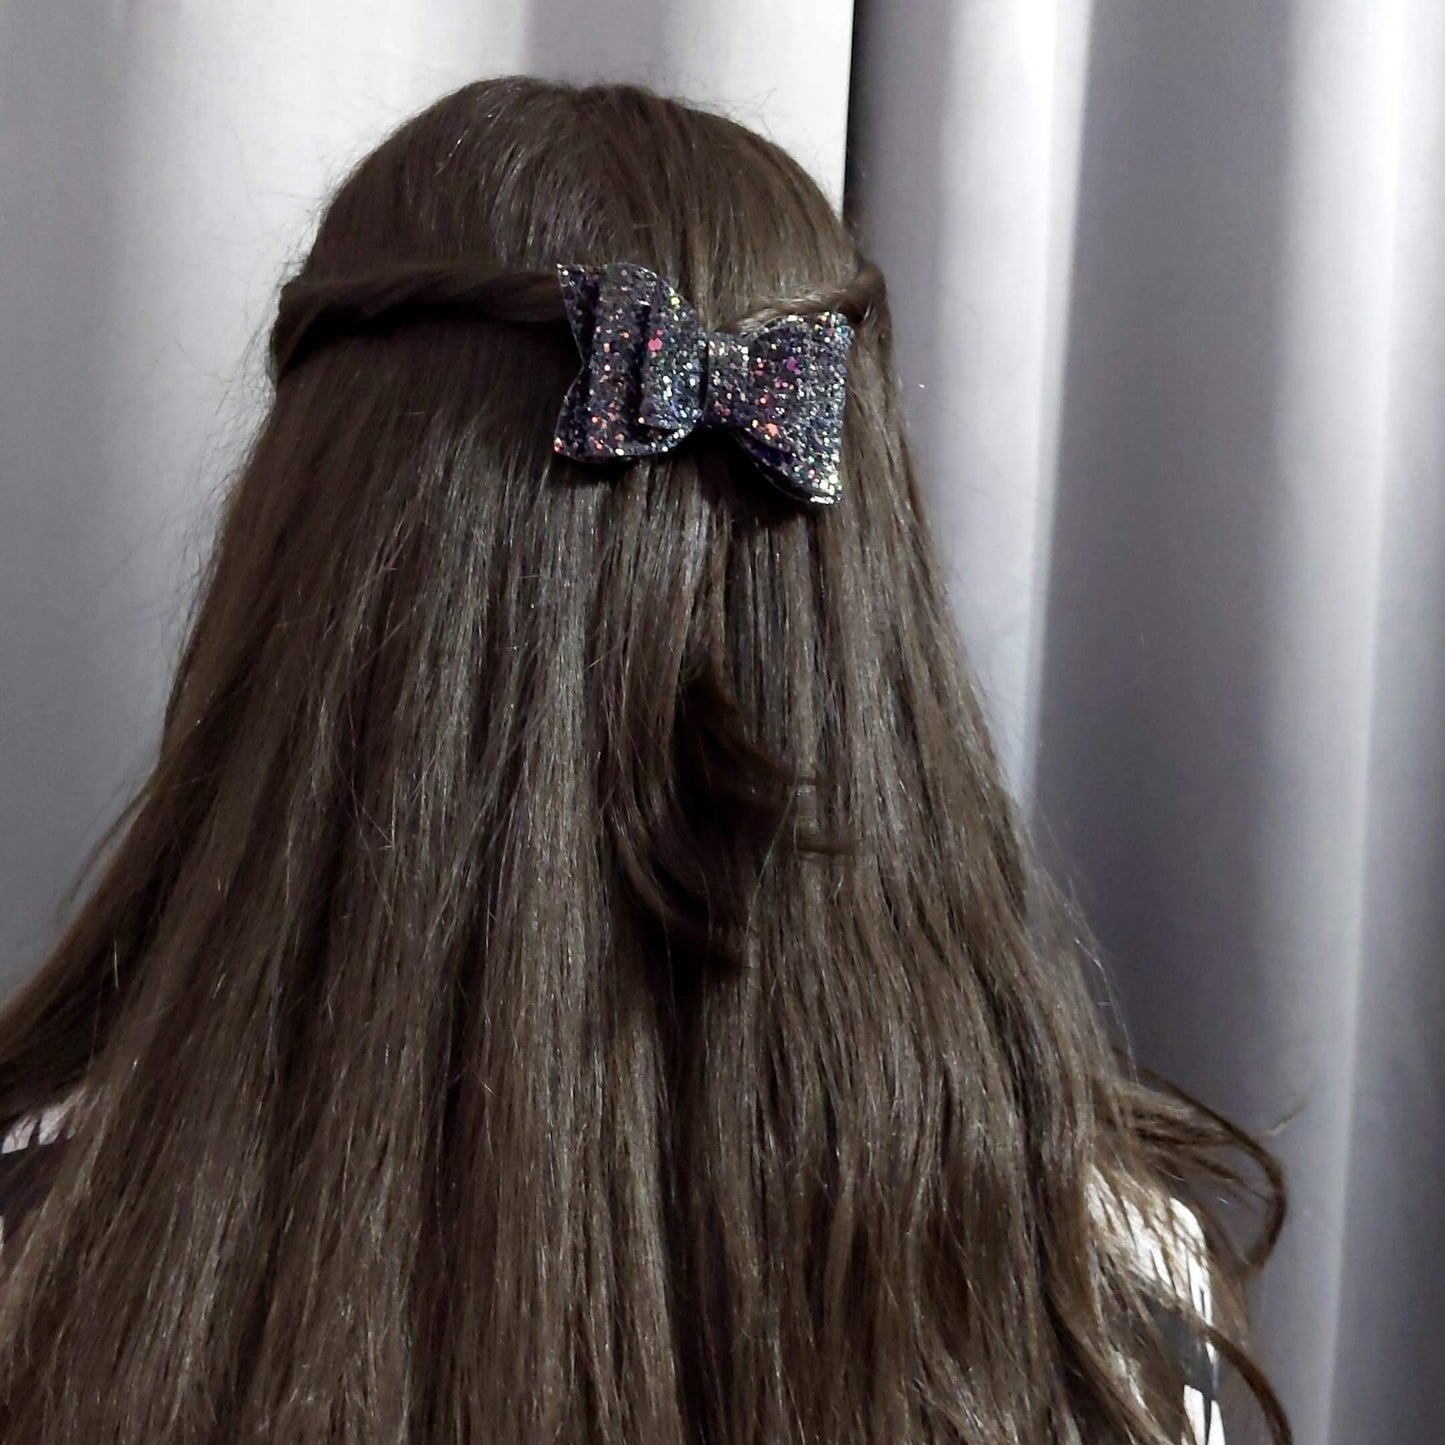 Black Glitter Bow Hair Clip Set | Designer Hair Accessories for Kids and Girls